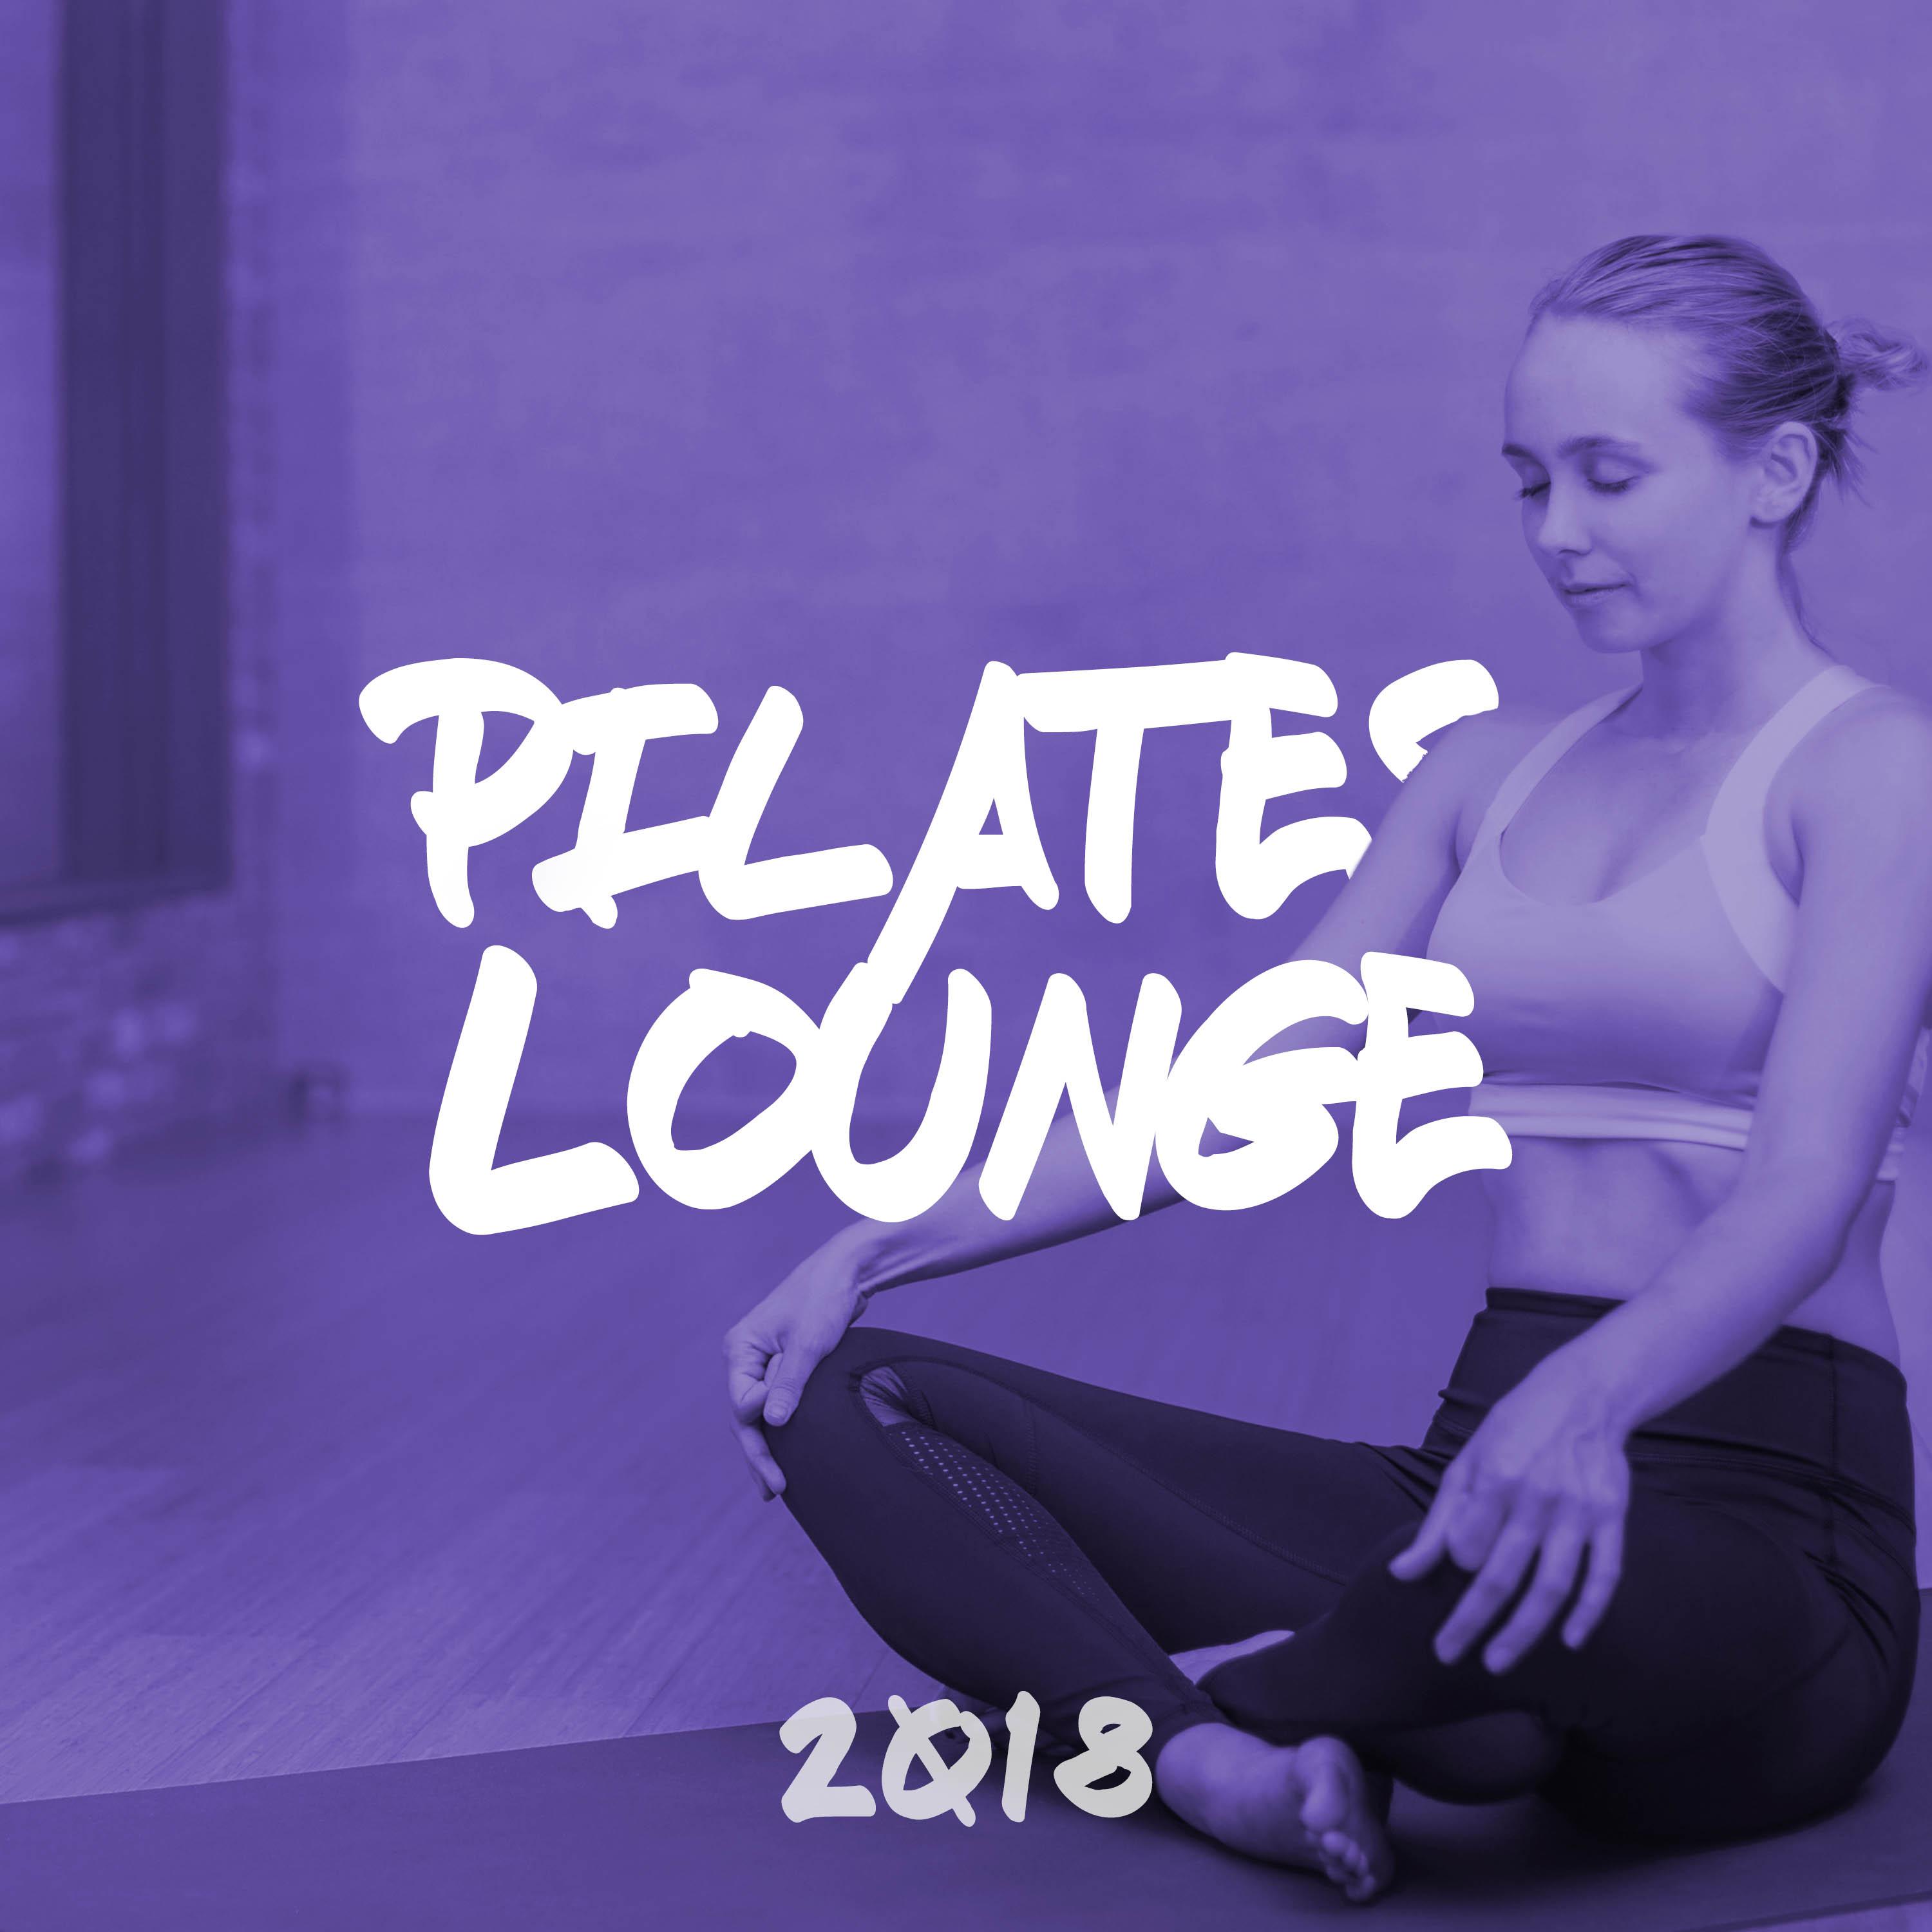 Pilates Lounge 2018 - Power Pilates Beginner Exercises Workout Music